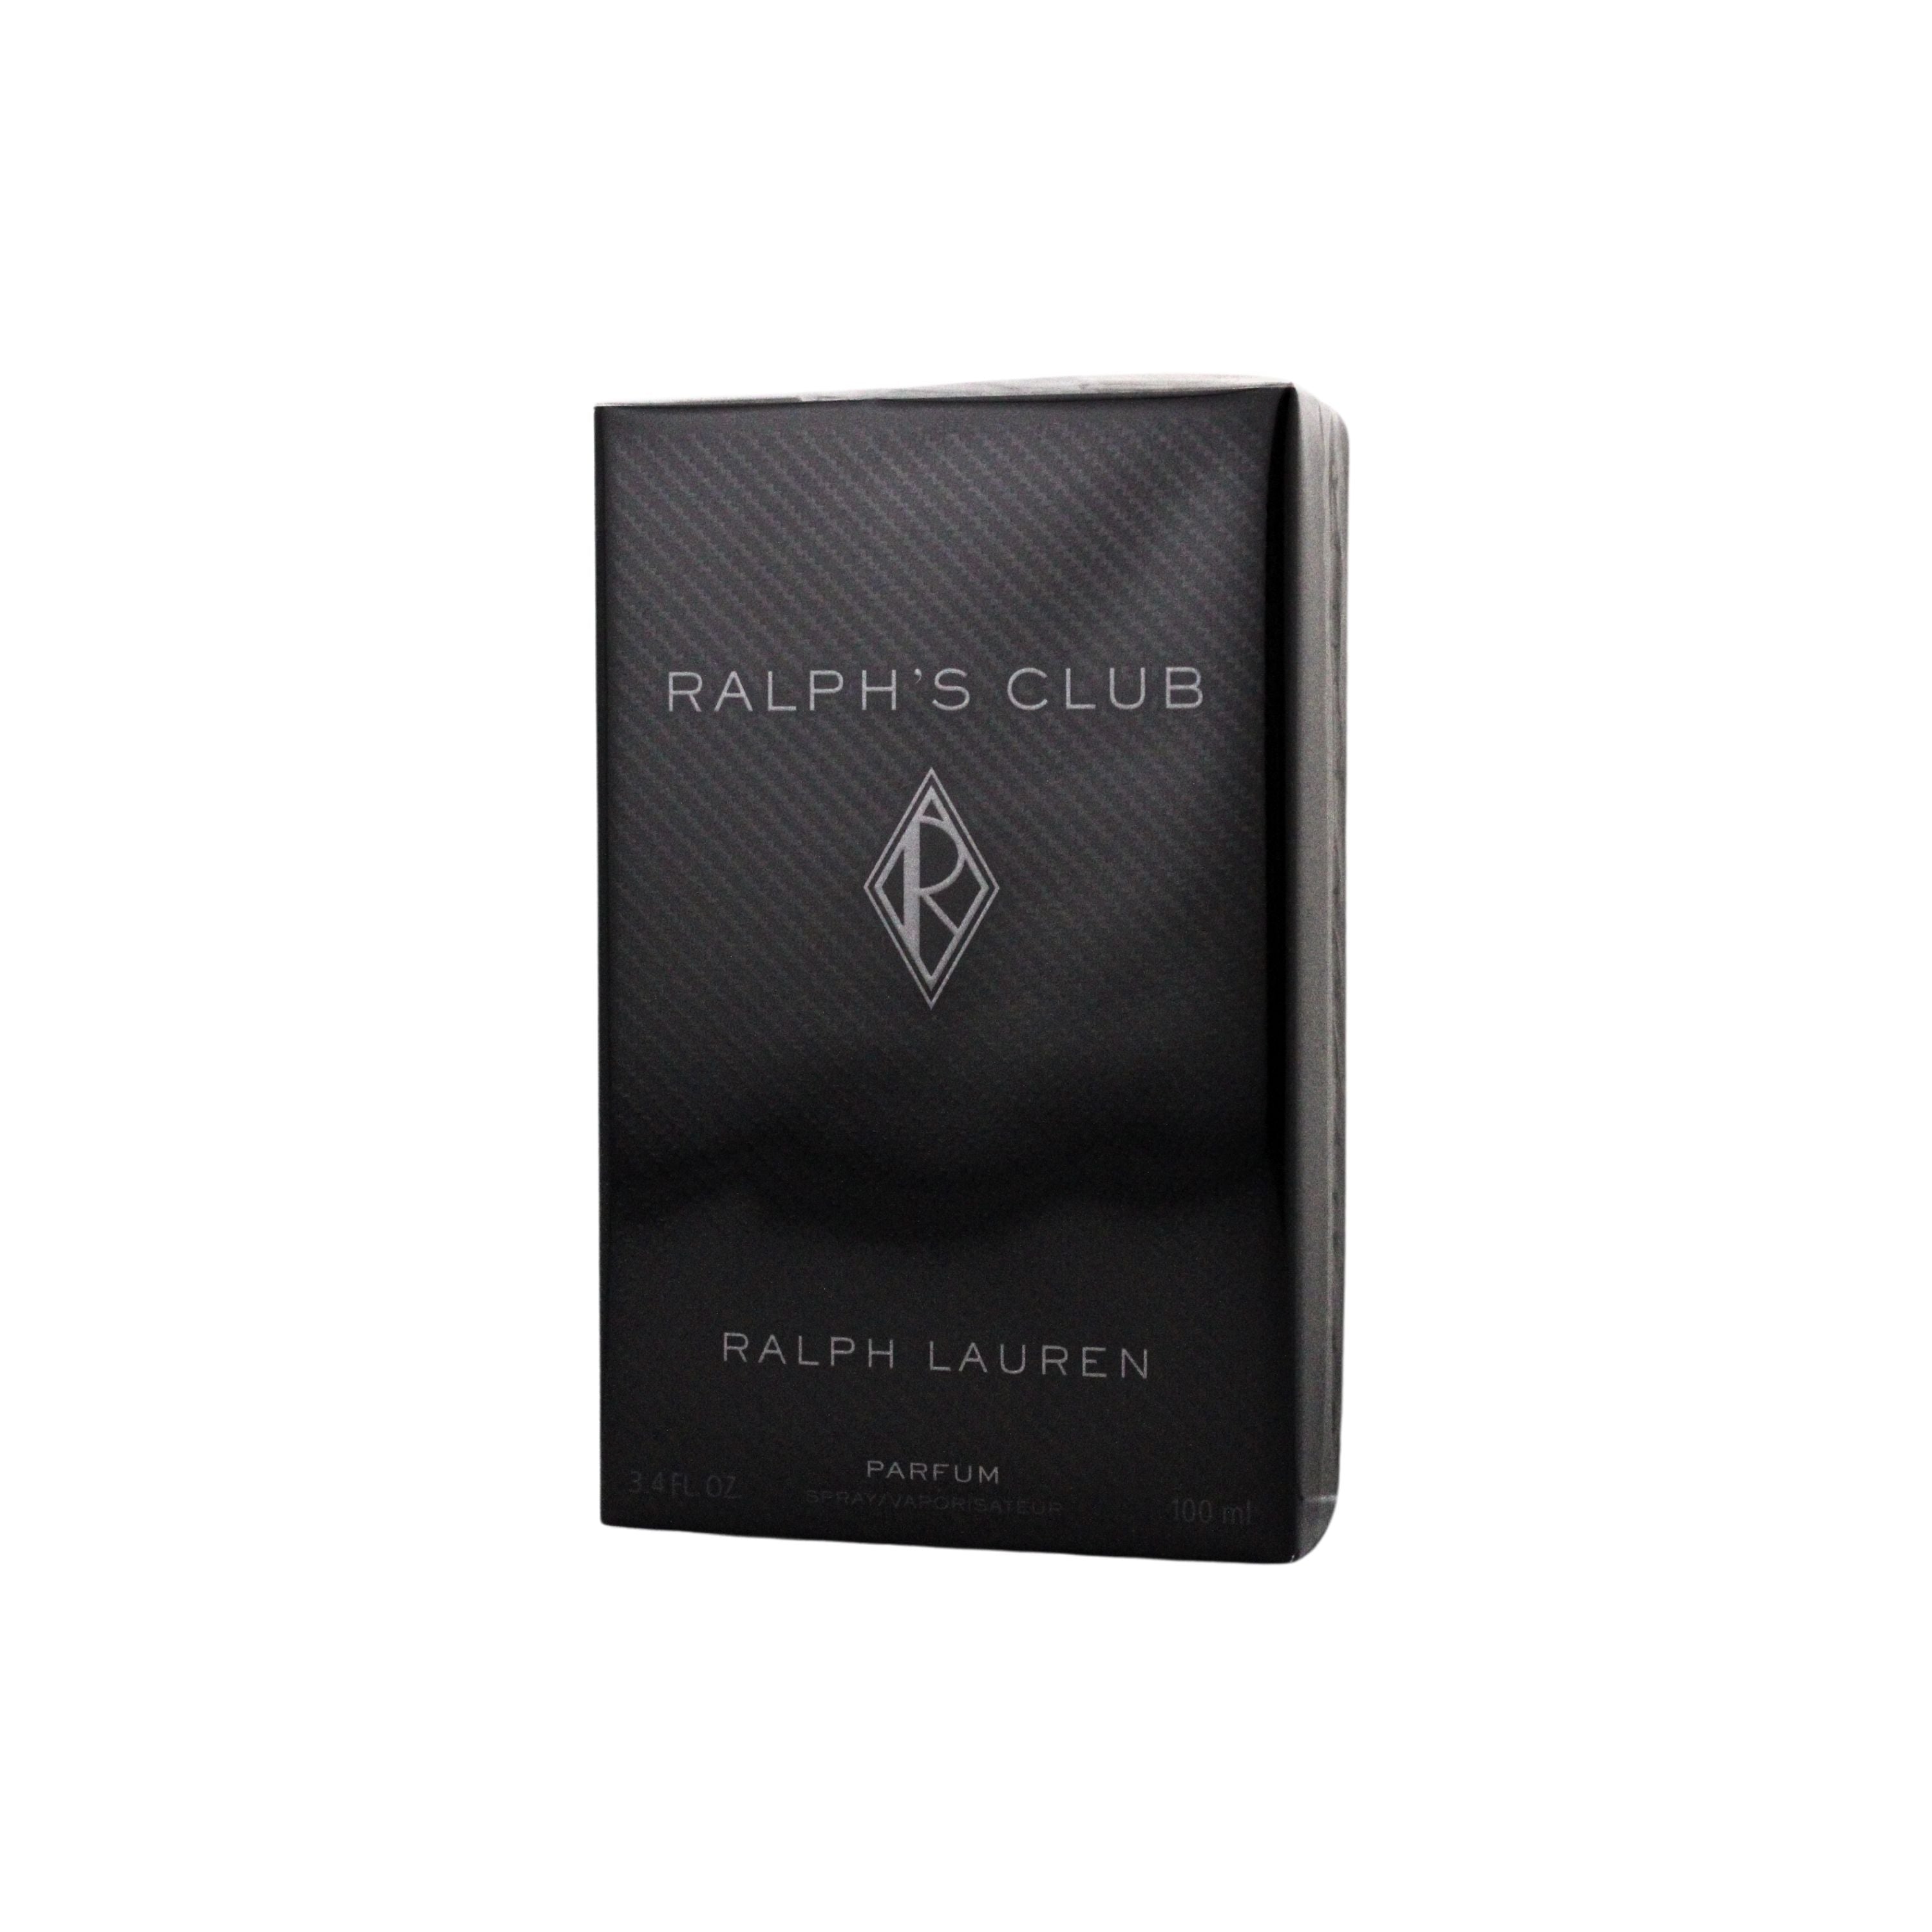 Ralph Lauren Ralph's Club Parfum for Men